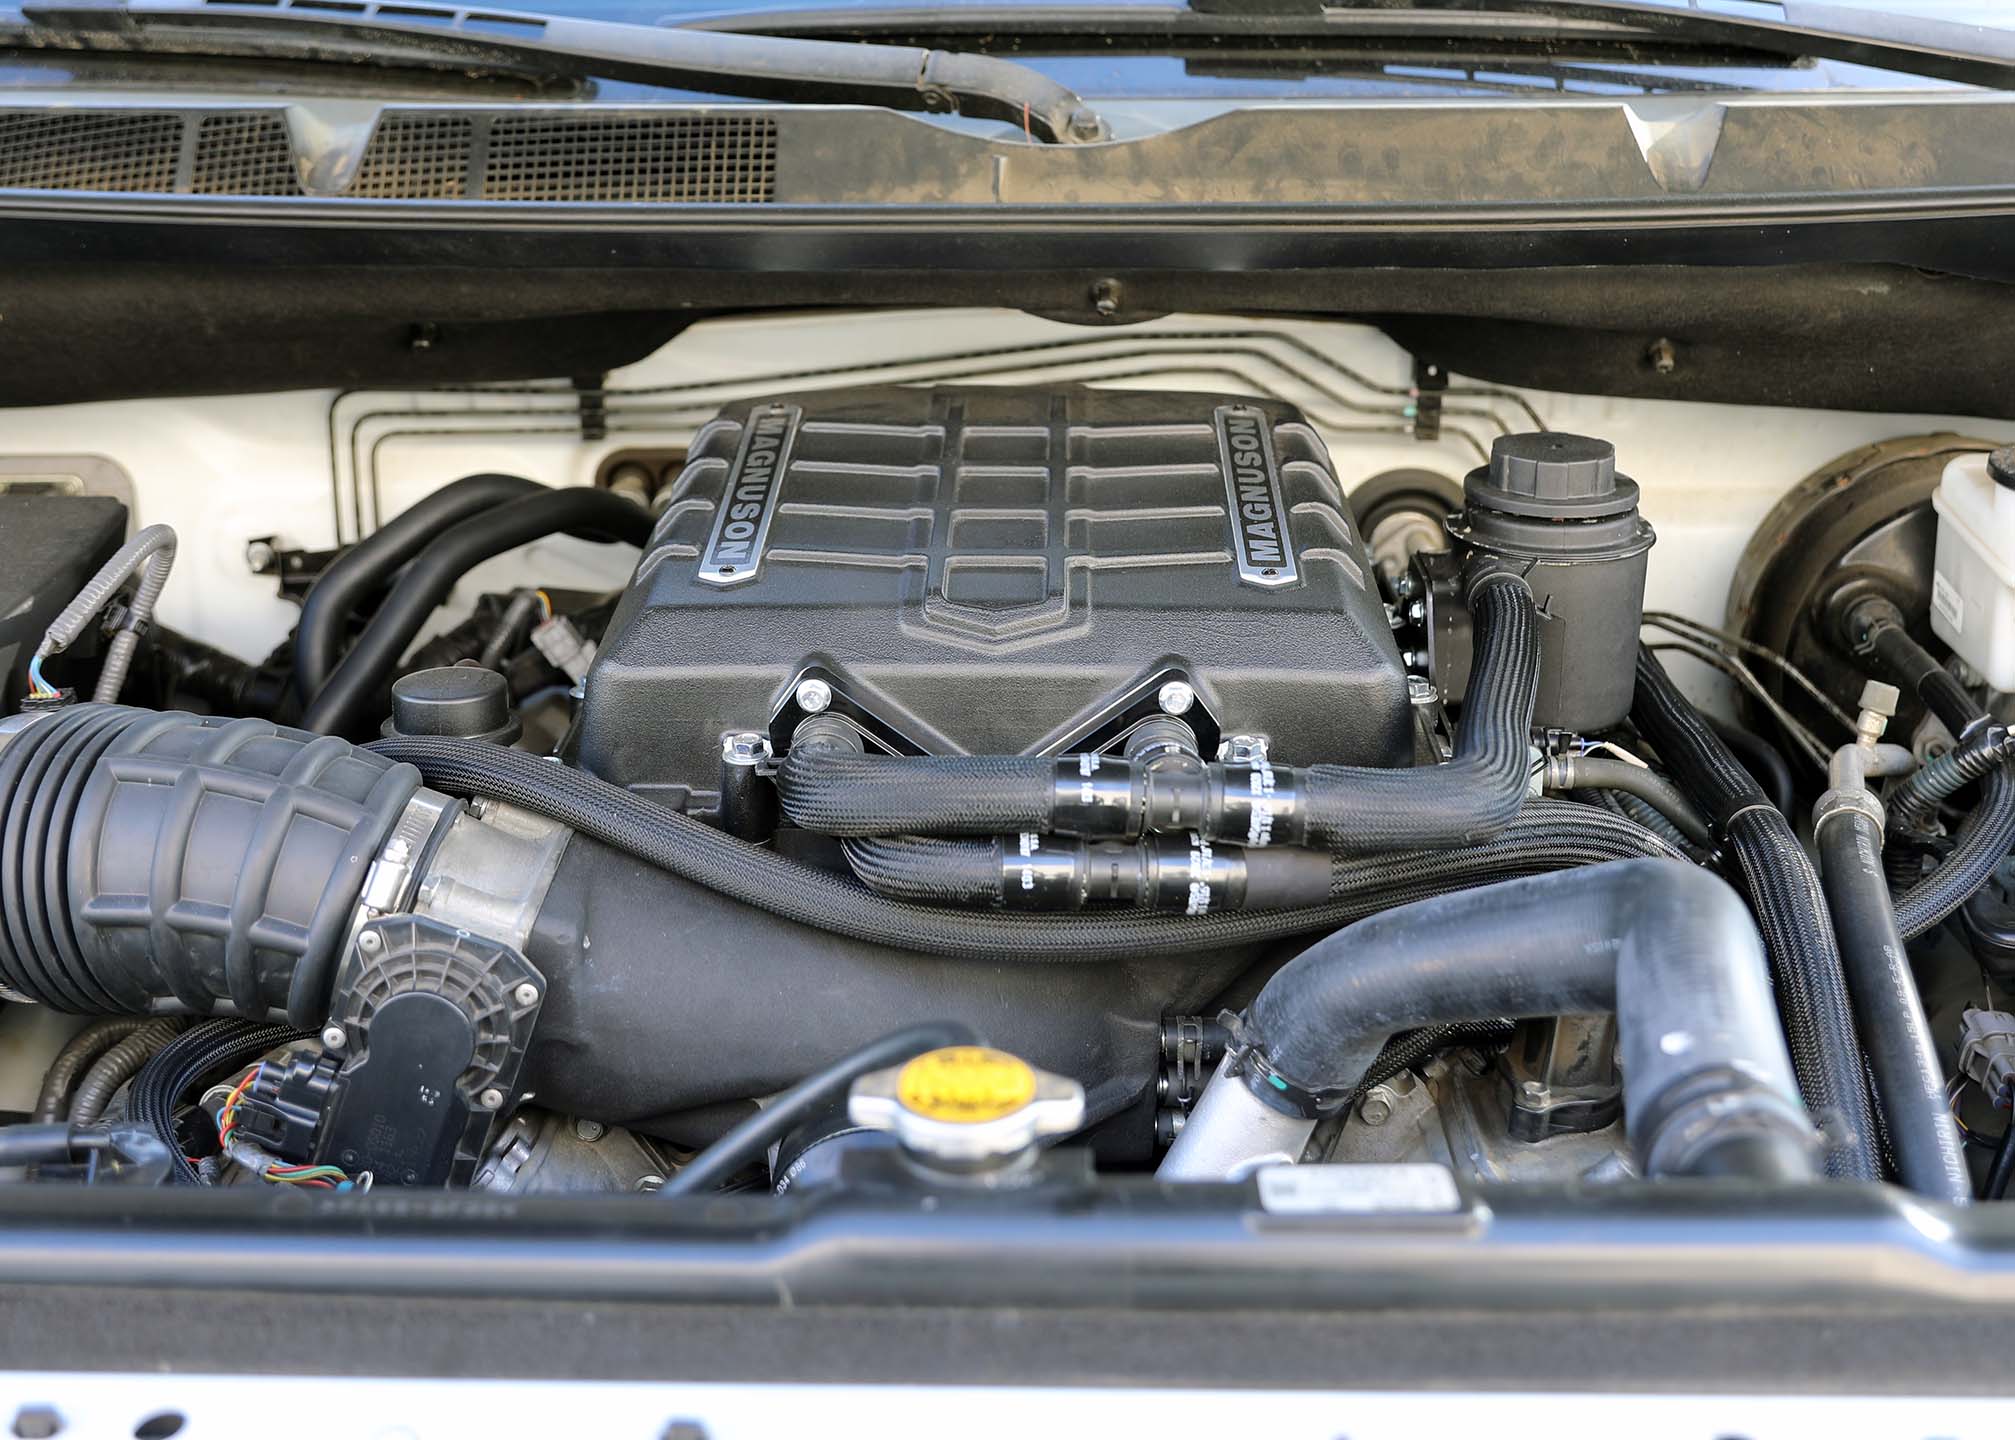 Magnuson 2019-2021 Toyota Tundra 5.7L Supercharger System TVS2650